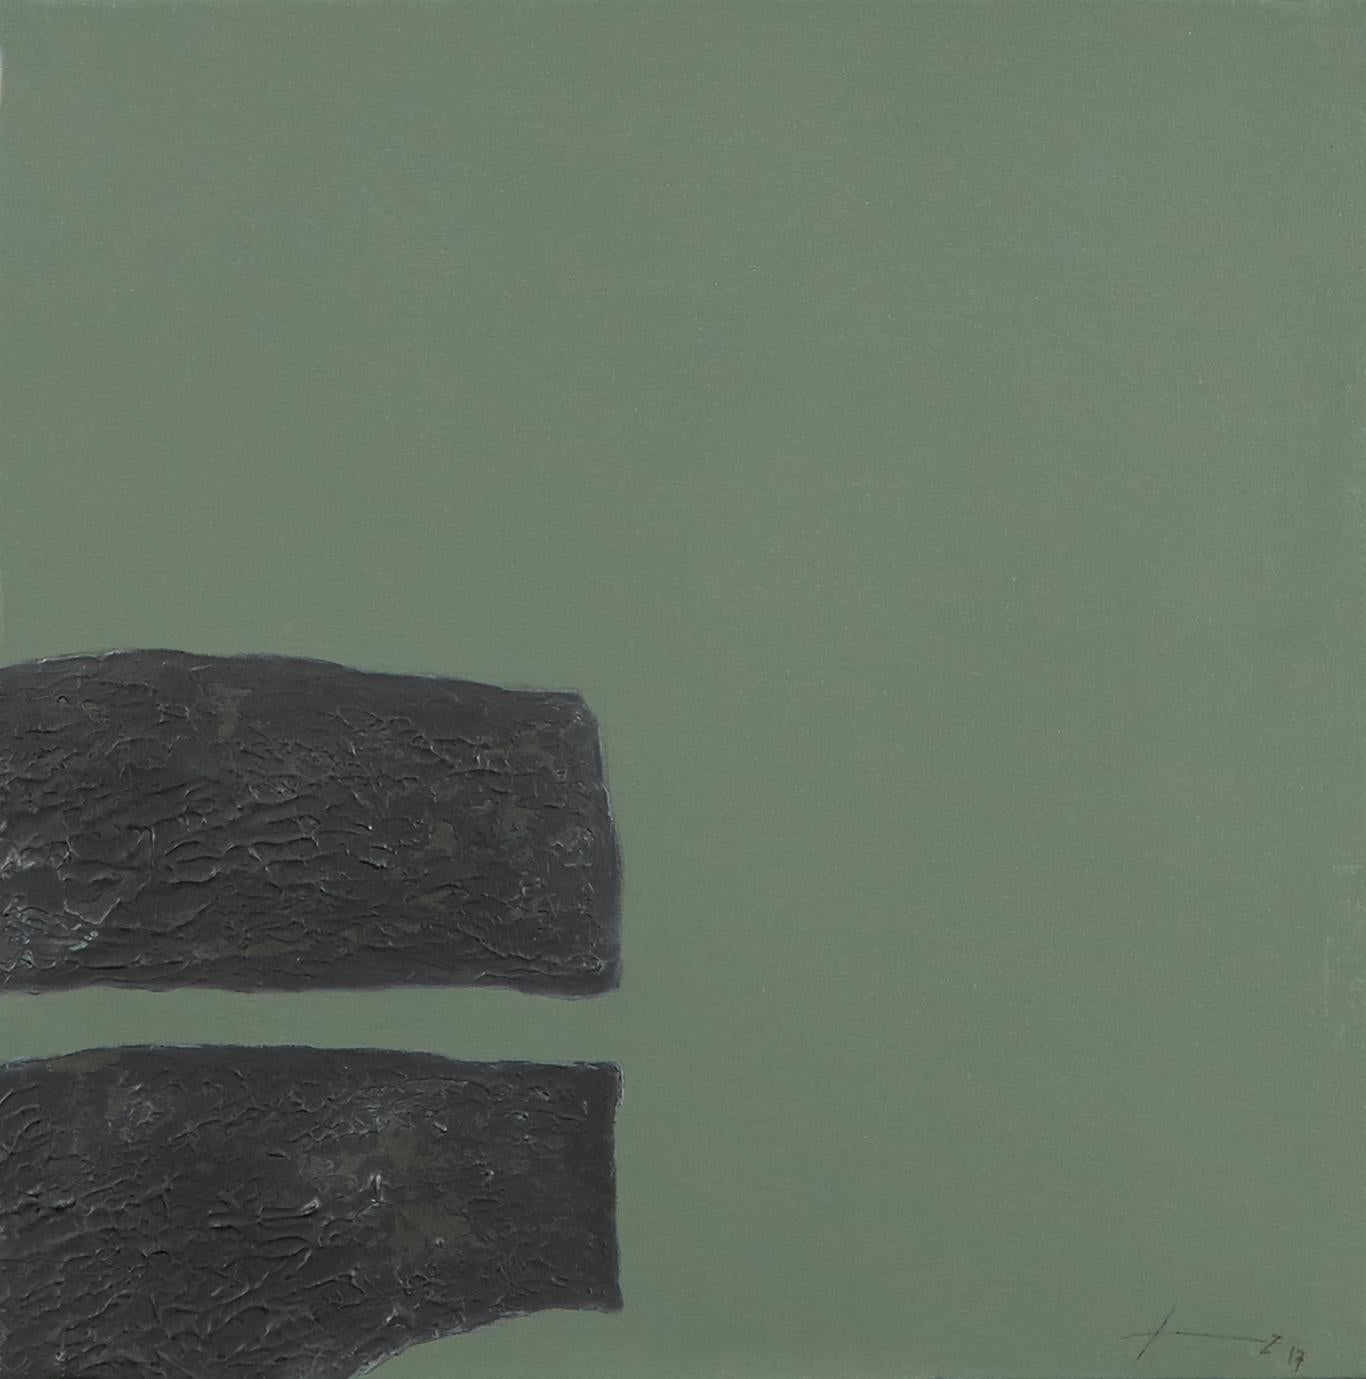 Stones XXIII - 21st Century, Contemporary, Abstract Painting, Mixed Media